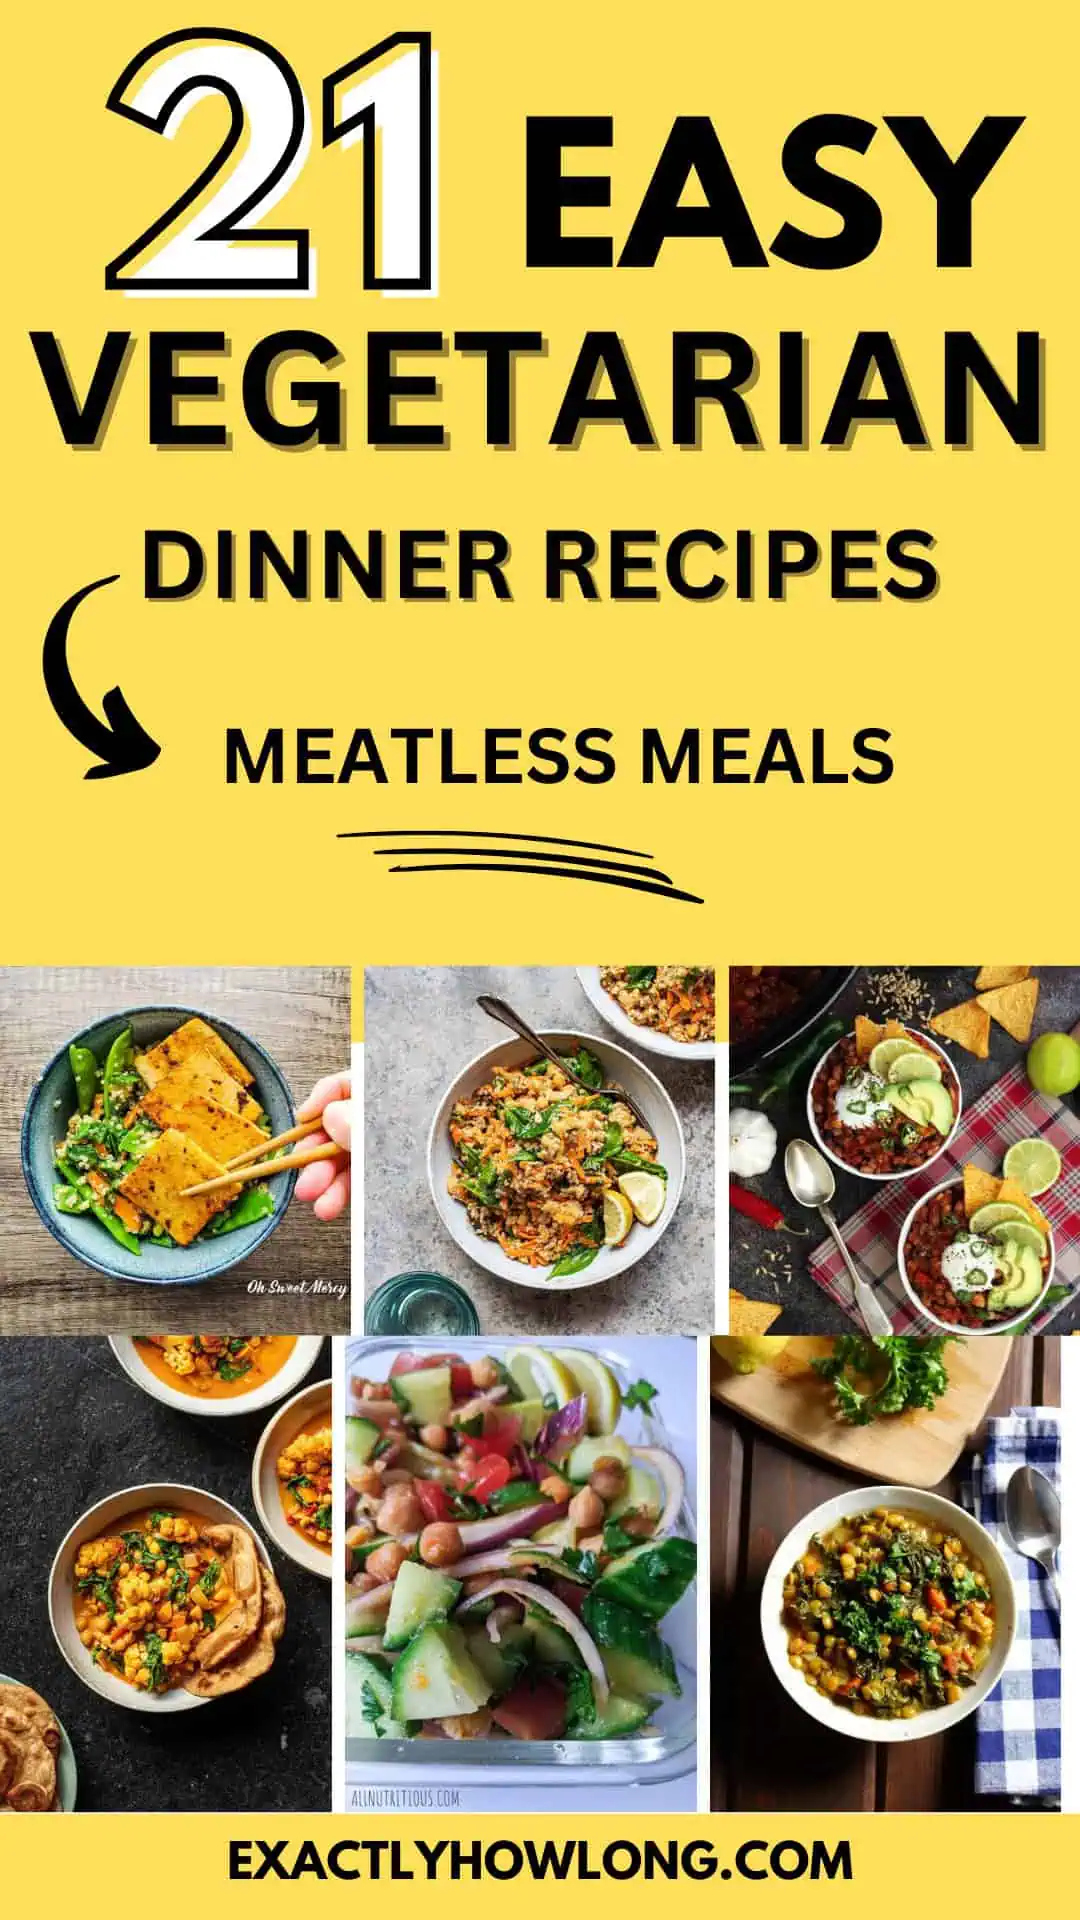 Vegetarian Dinner Recipes: Simple, Fast, Weeknight Meals